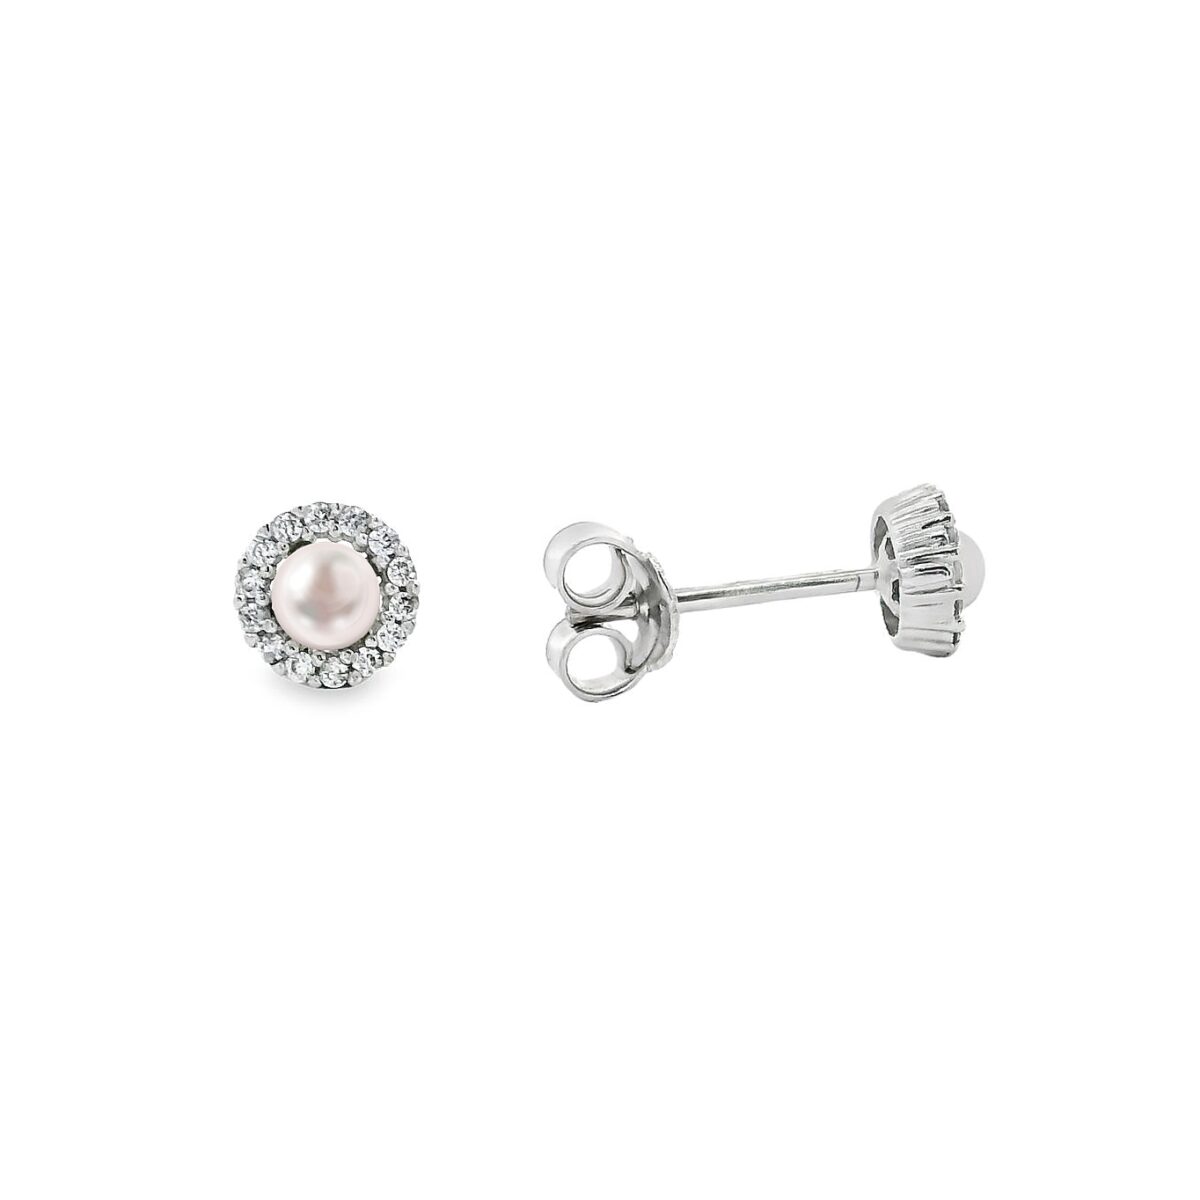 Jewellers - Σκουλαρίκια Ροζέτα με Μαργαριτάρι και ζιργκόν